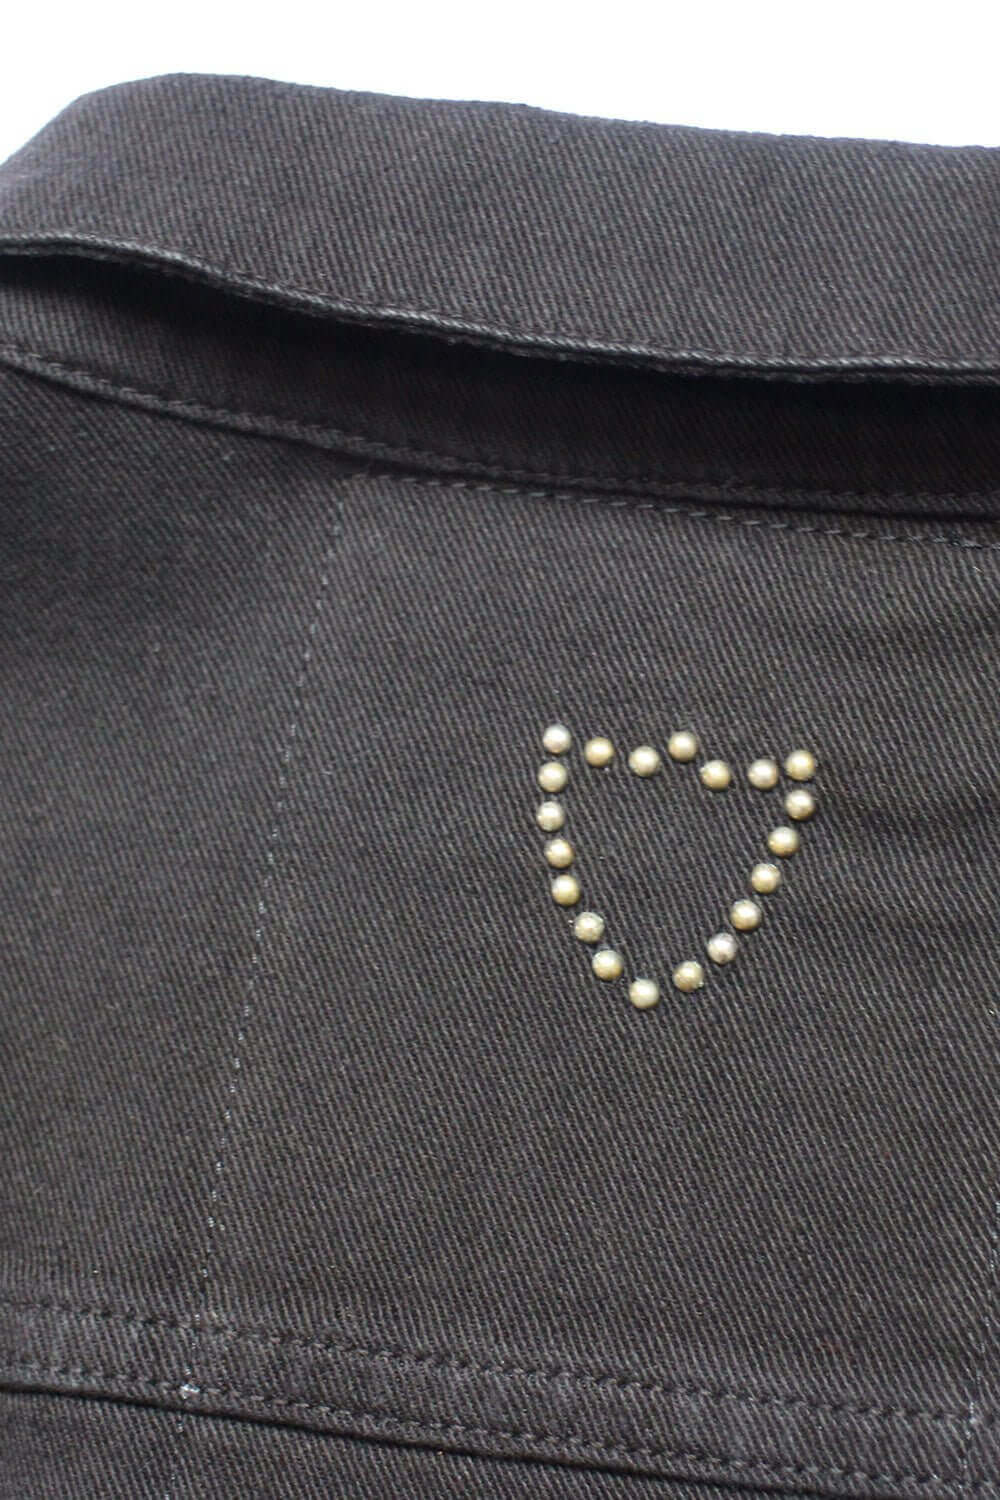 ENDENDALE BLACK DENIM JACKET Black denim studded jacket, button closure. 100% cotton. Made in Italy. HTC LOS ANGELES